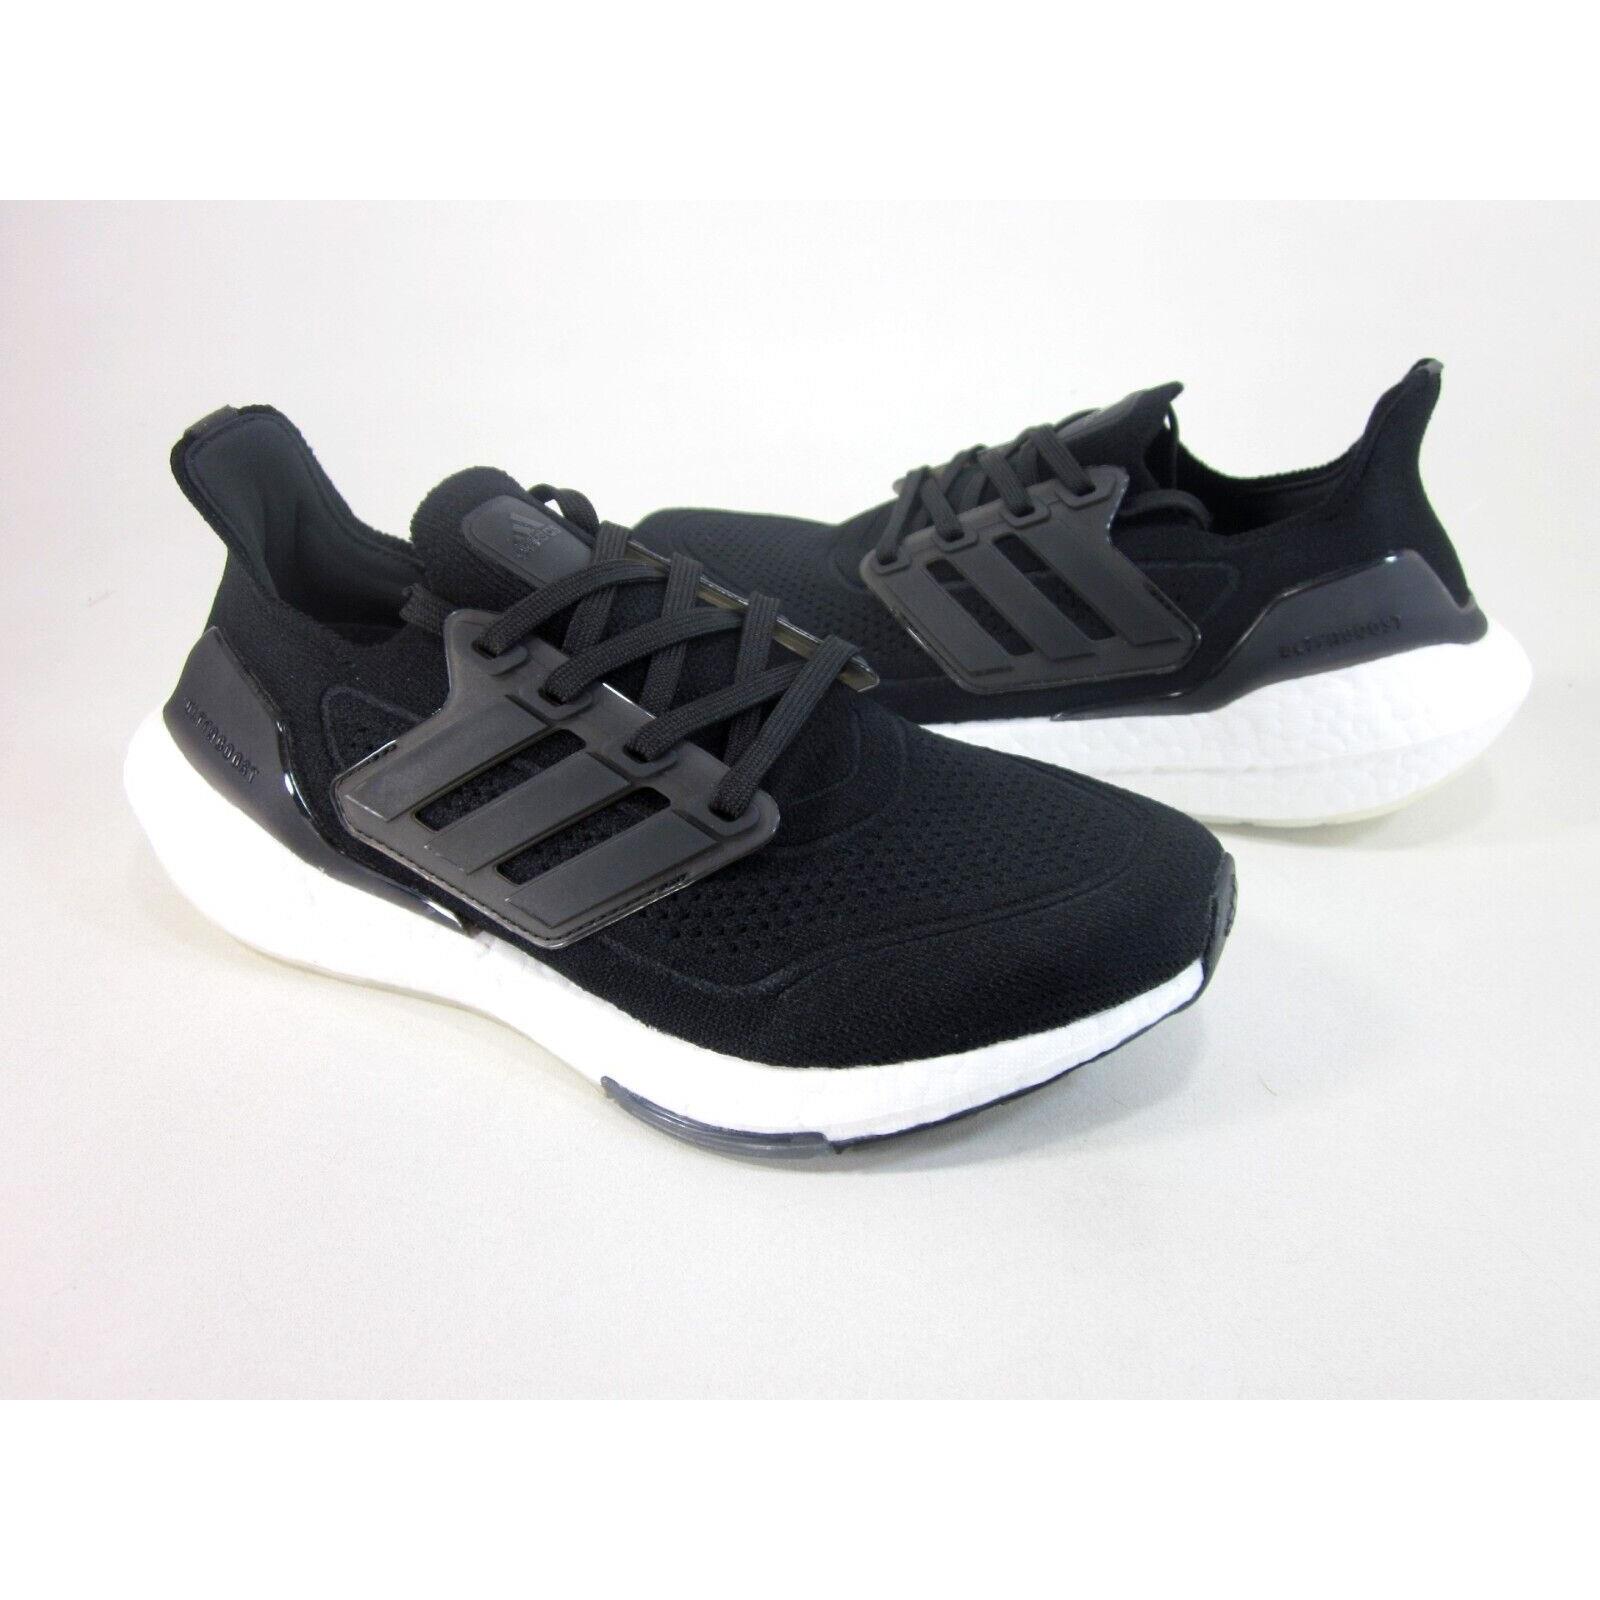 Adidas shoes Ultraboost - Black/Grey/White 4